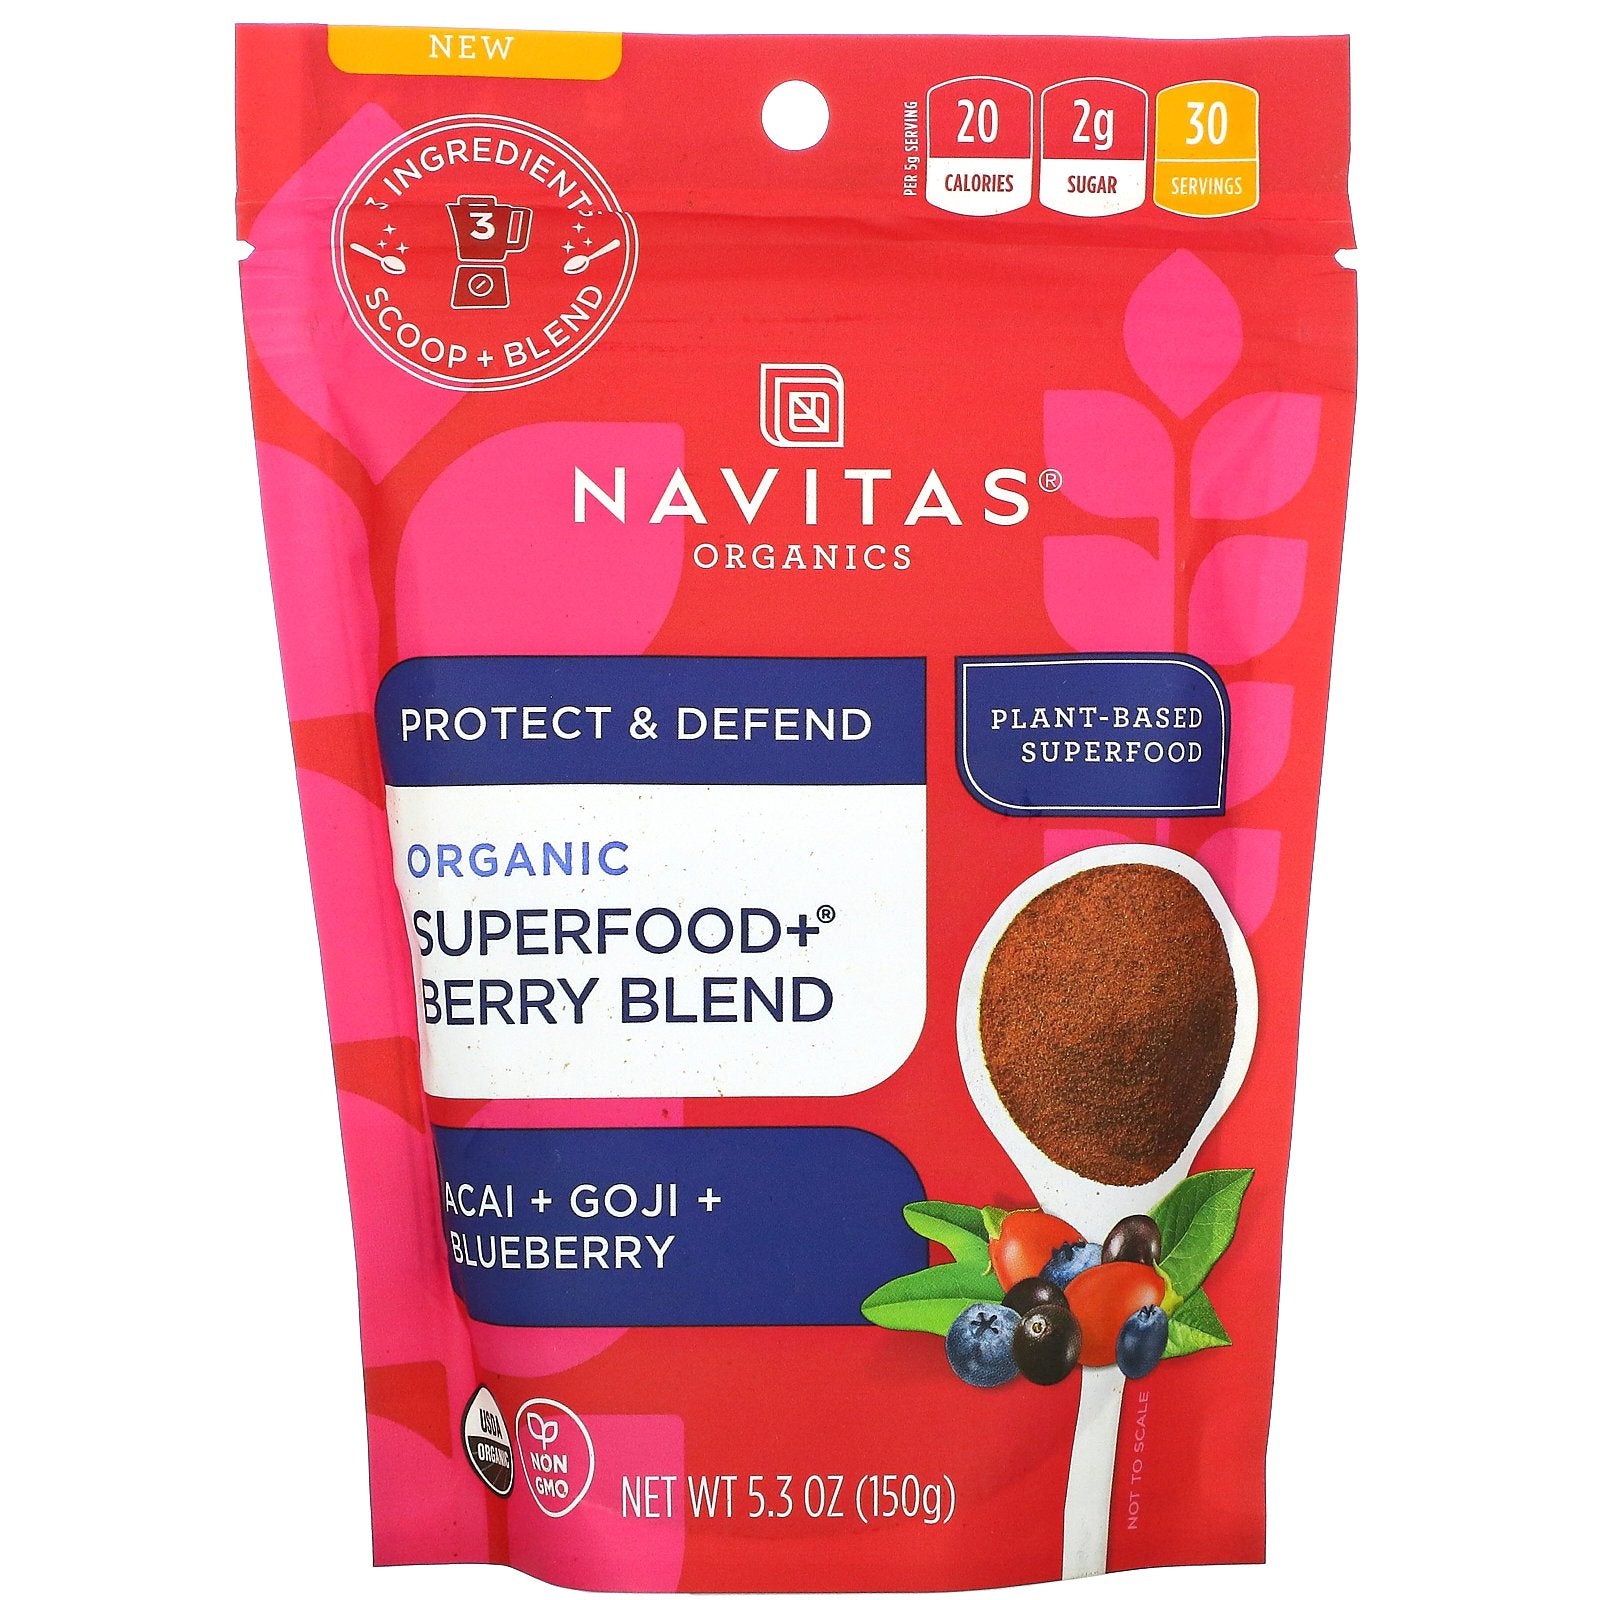 Navitas Organics, Organic Superfood+ Berry Blend, Acai + Goji + Blueberry (150 g)